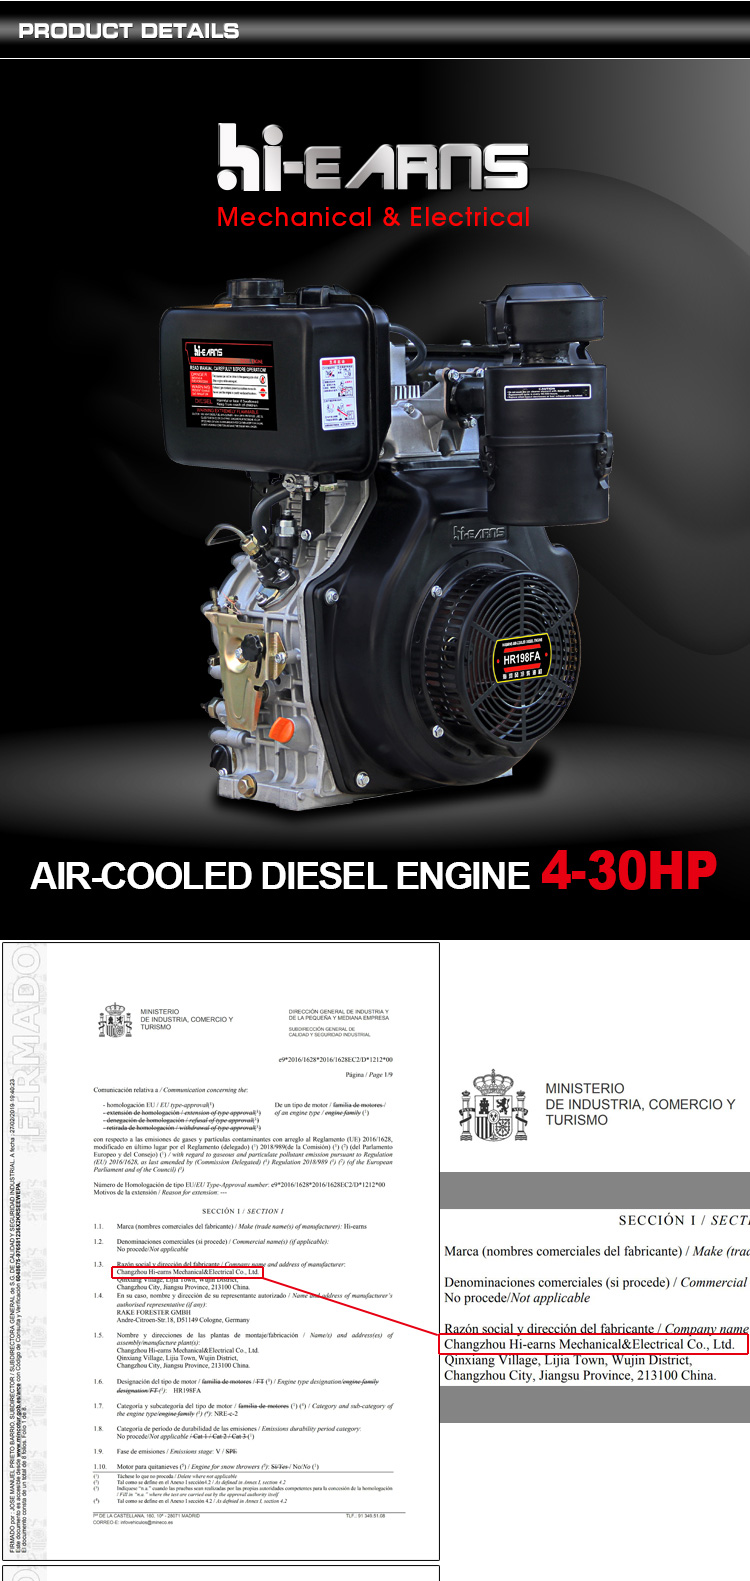 changzhou Hi-earns 2V98FD air cooled diesel engine 2 cylinders